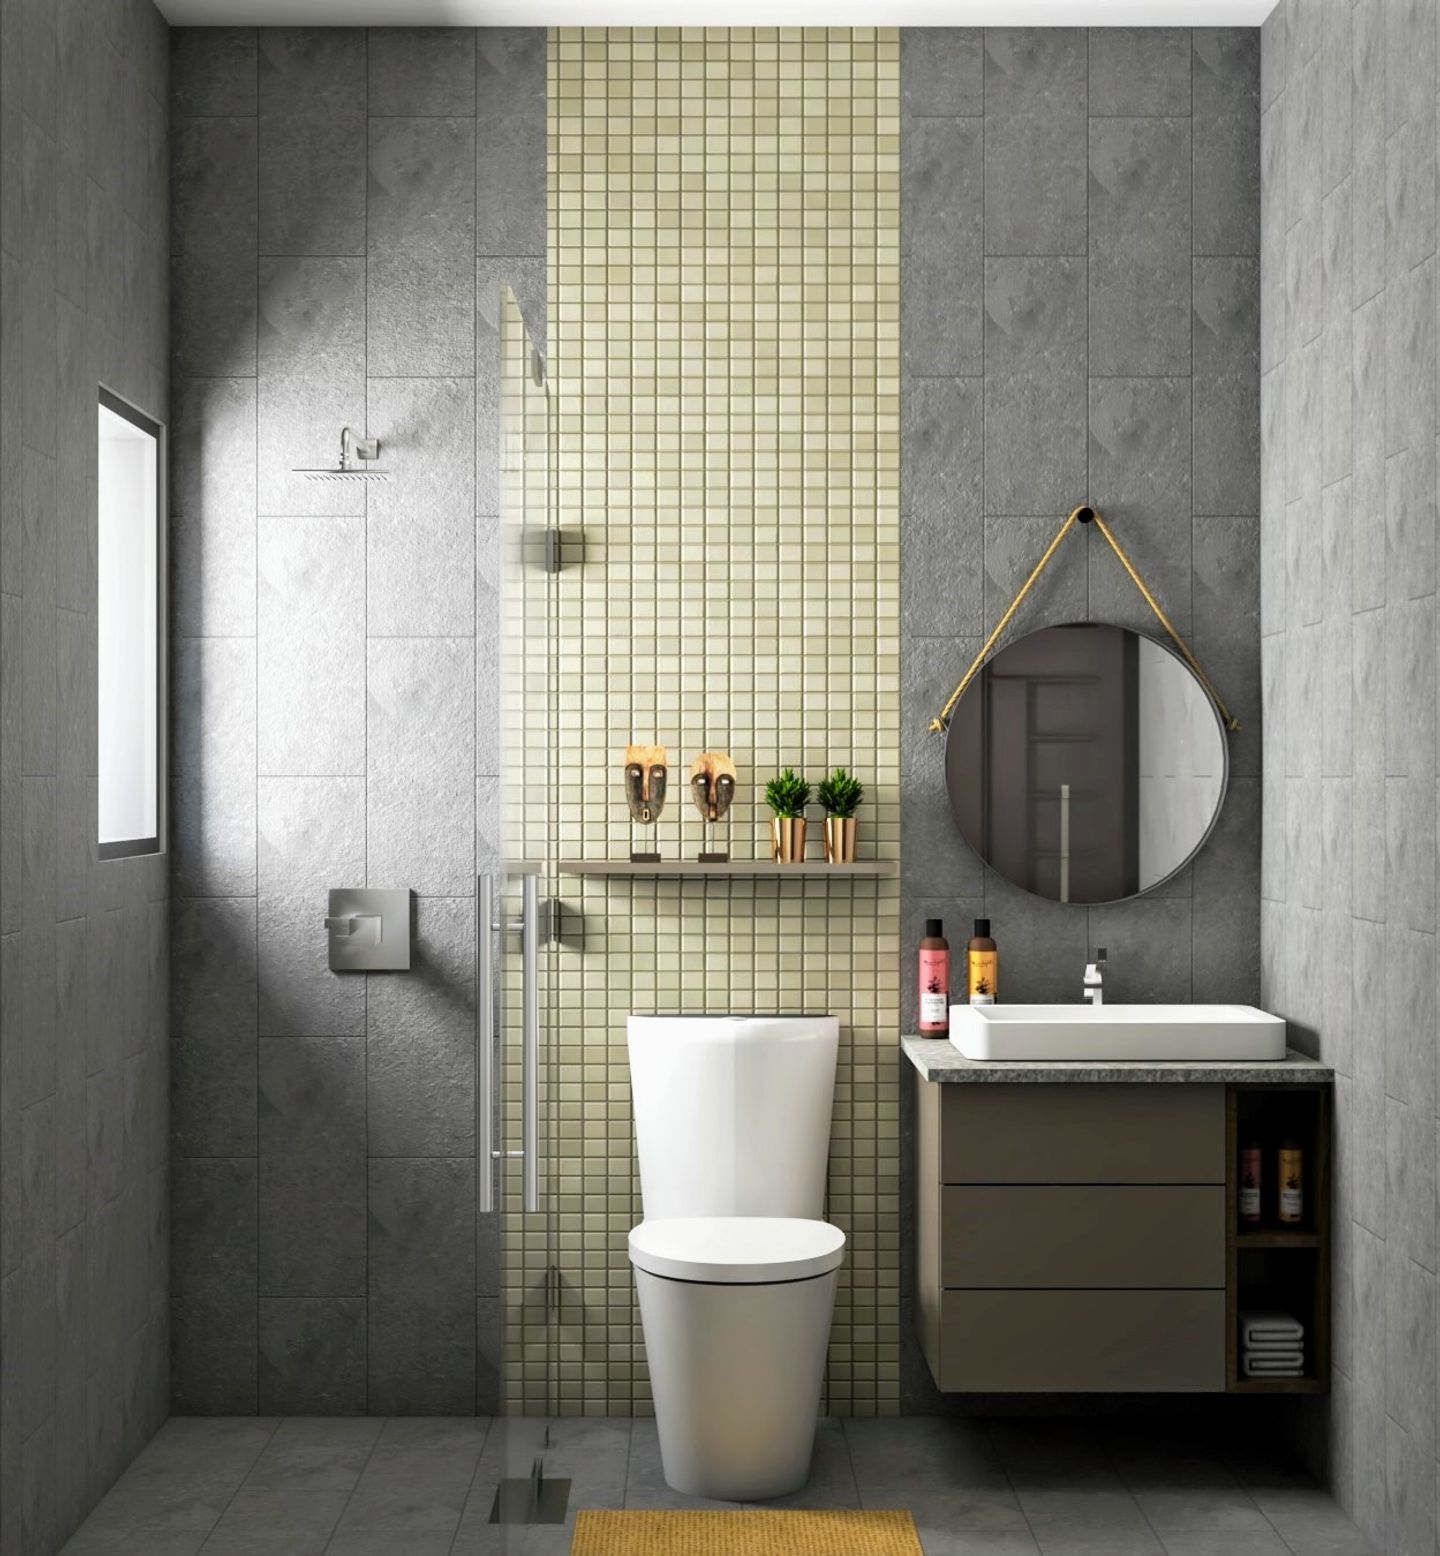 Practical Contemporary Design Bathroom - Livspace